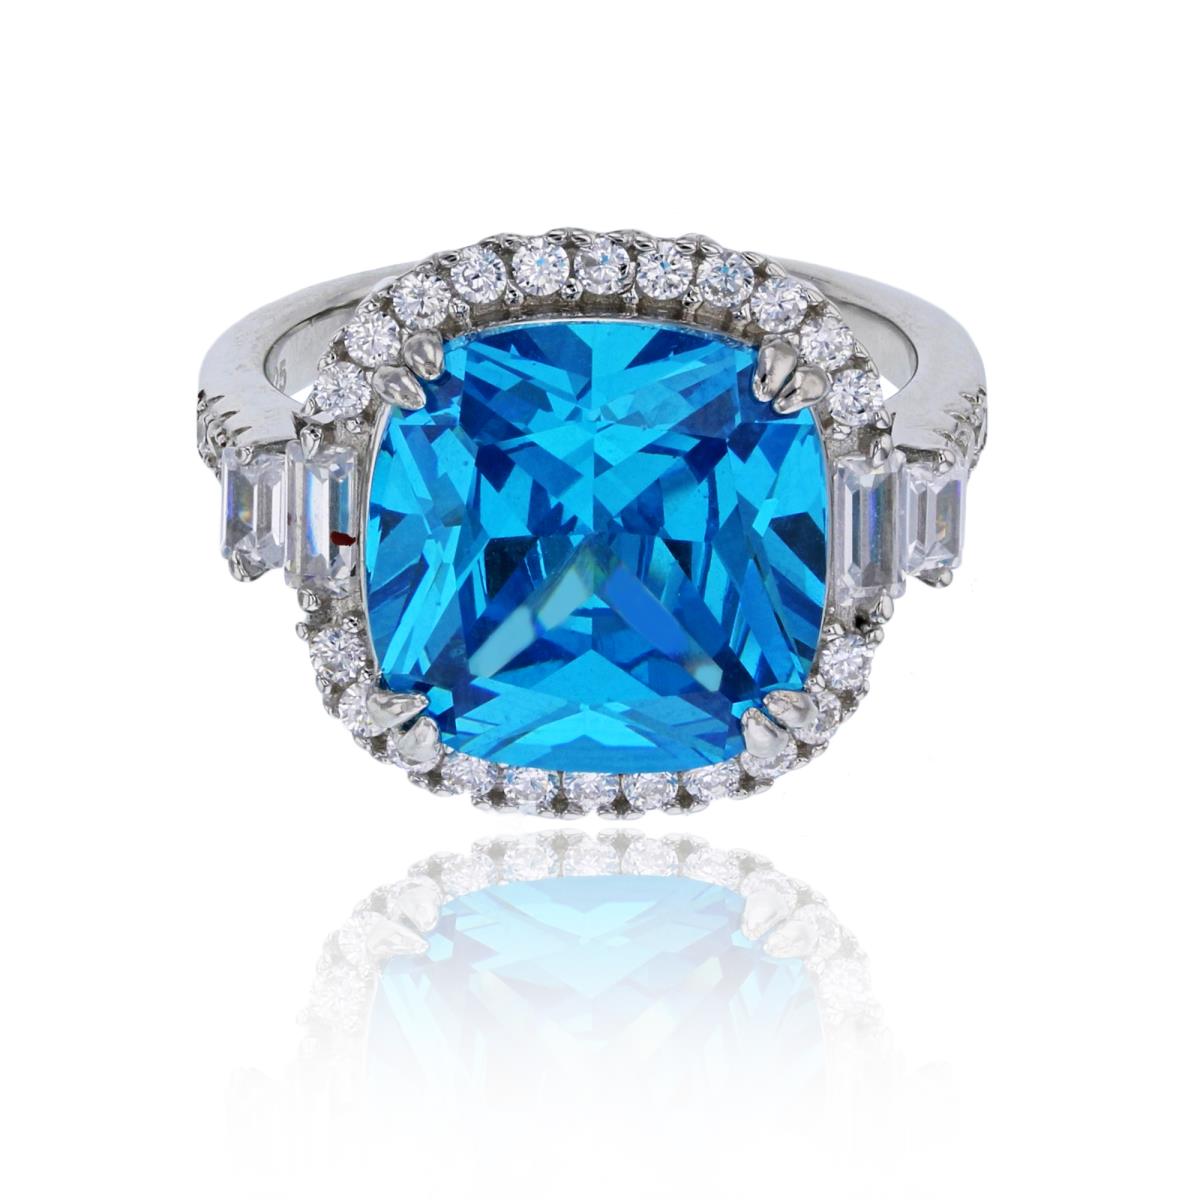 Sterling Silver Rhodium 12mm Swiss Blue Cushion Cut & White Glass Halo Fashion Ring